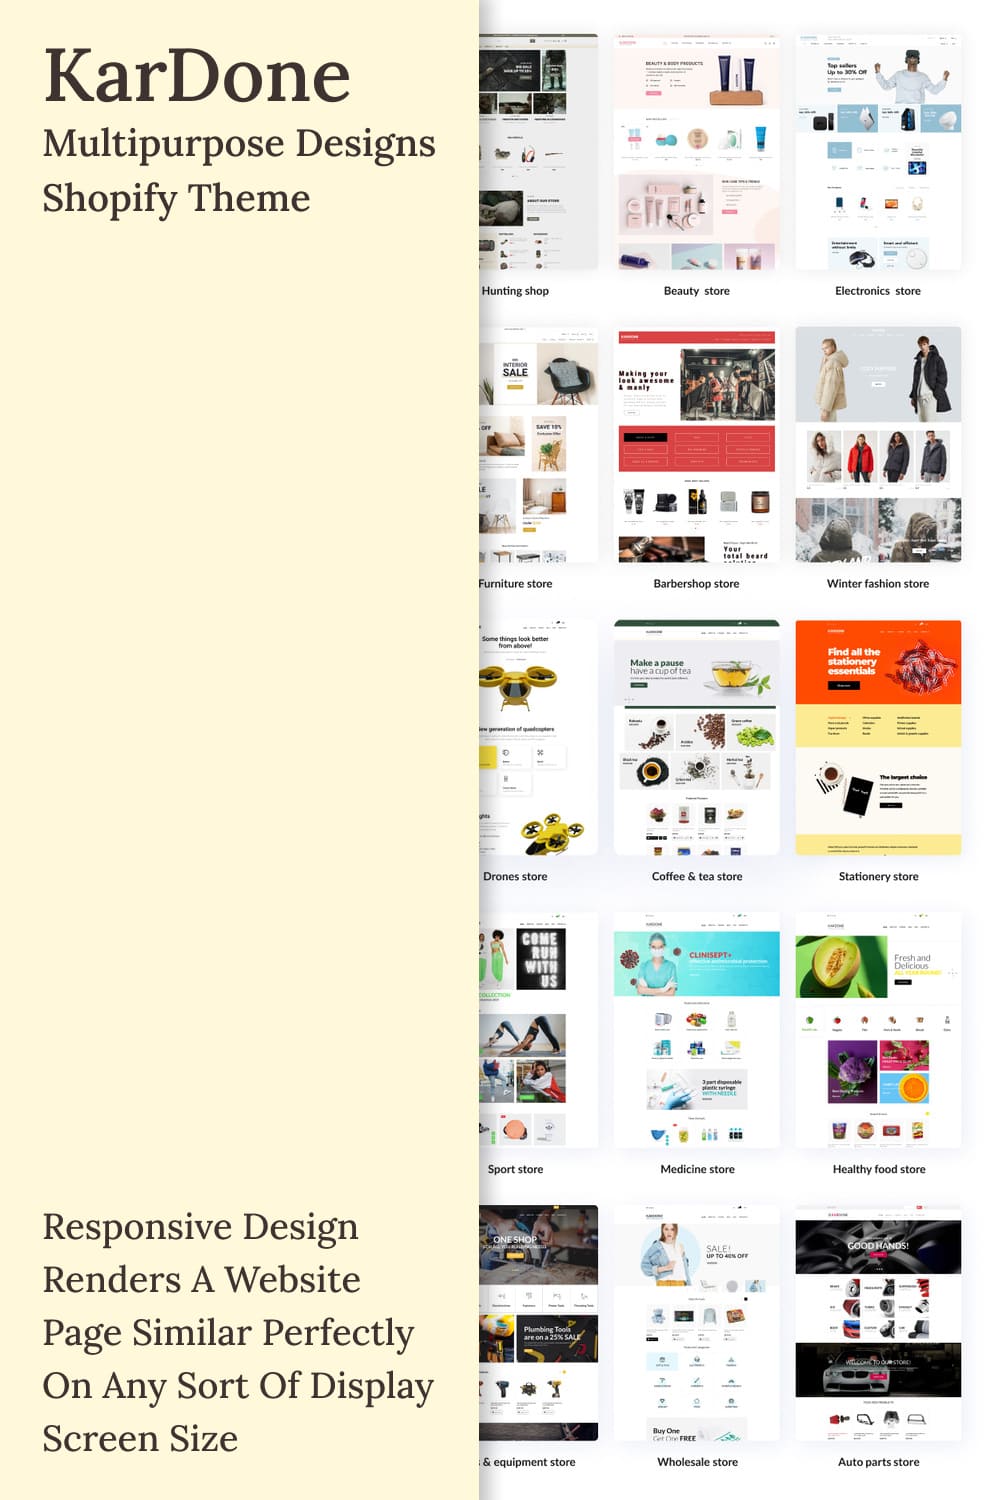 Kardone multipurpose designs shopify theme, picture for pinterest 1000x1500.